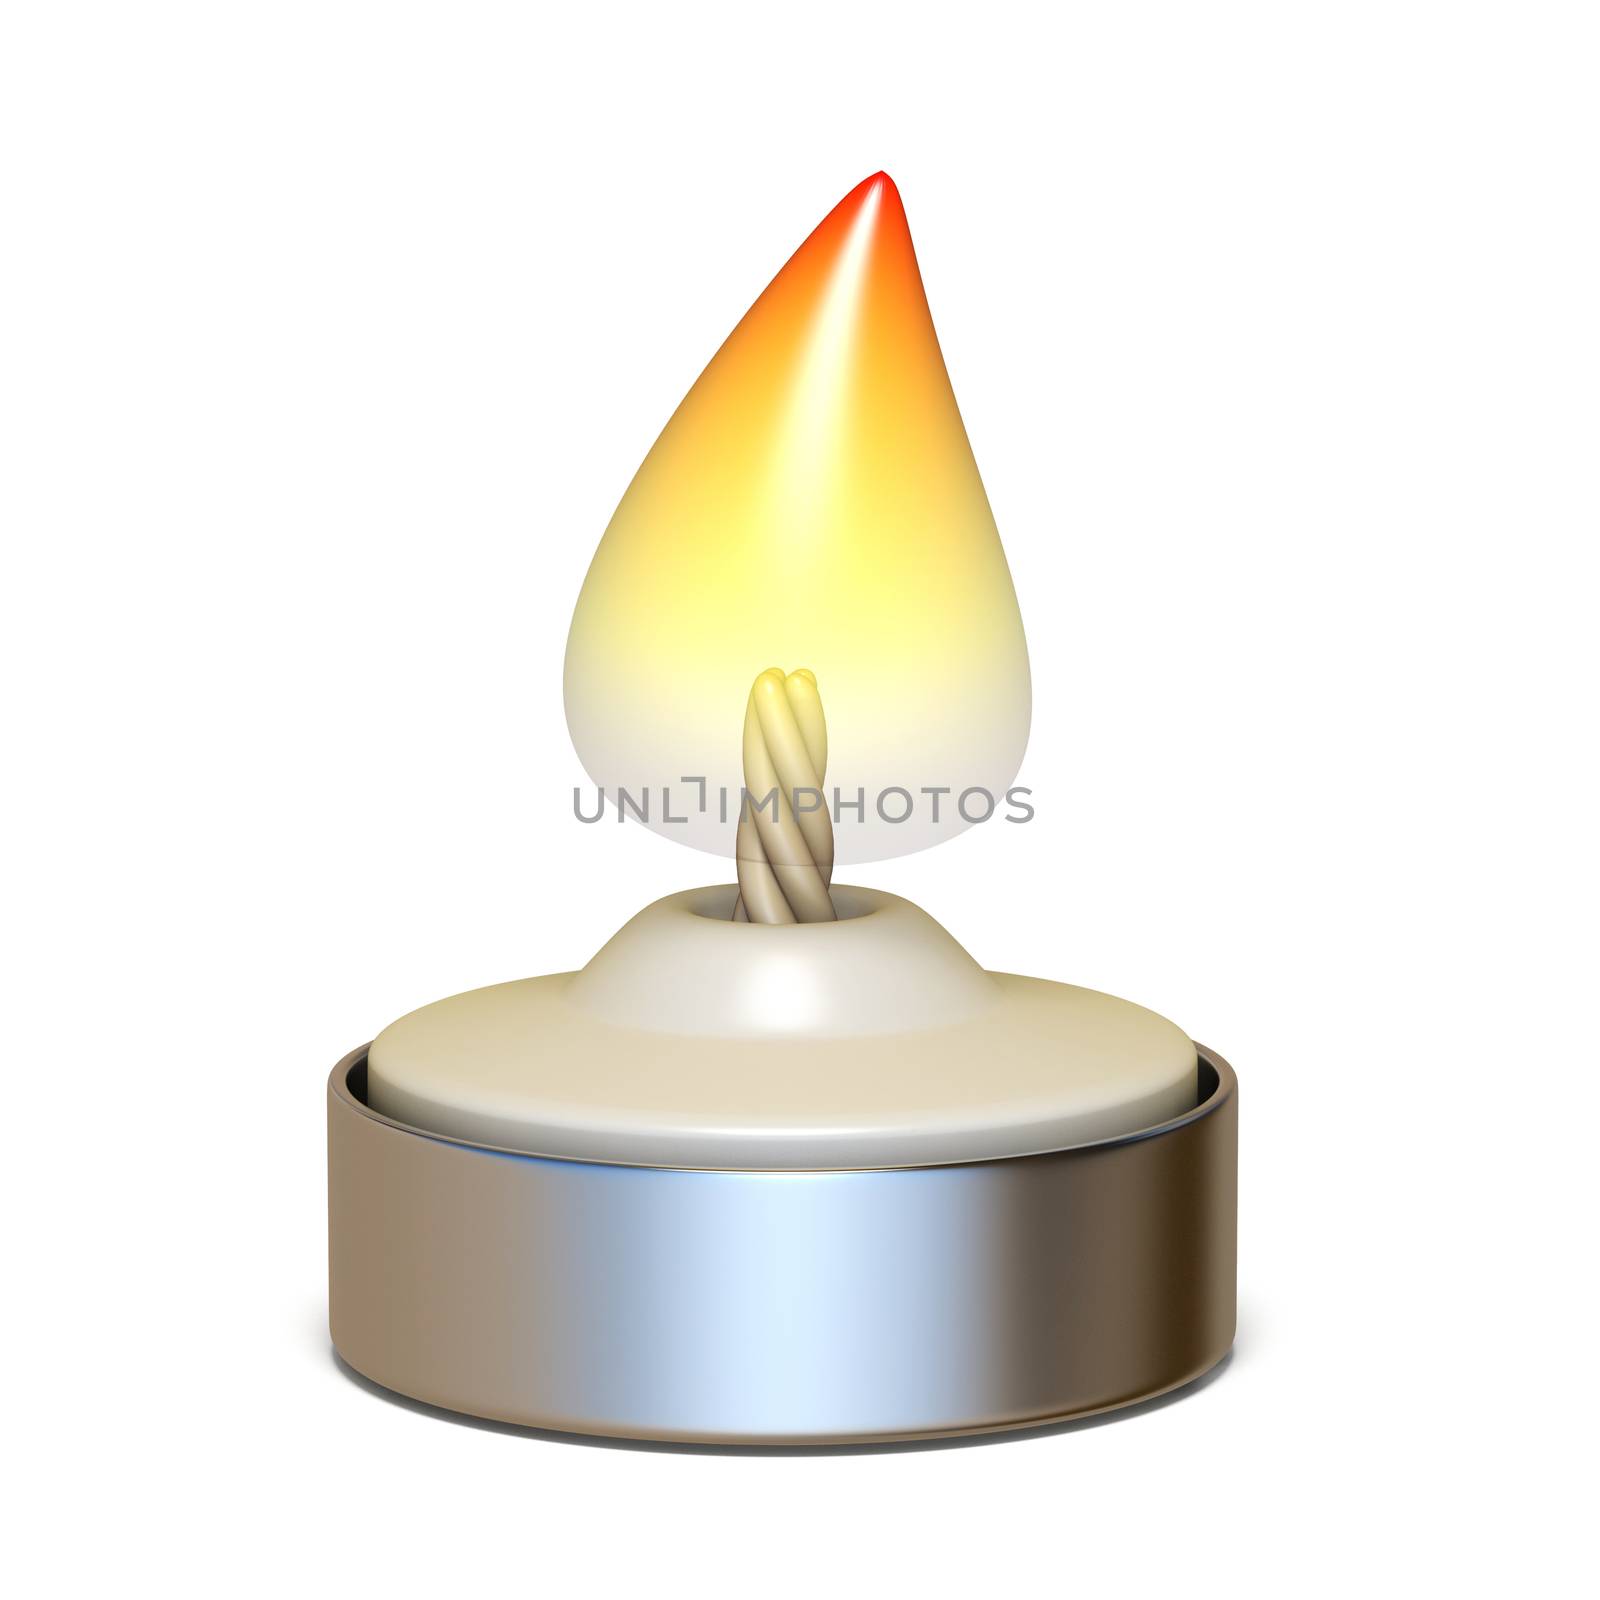 Burning candlelight 3D render illustration by djmilic